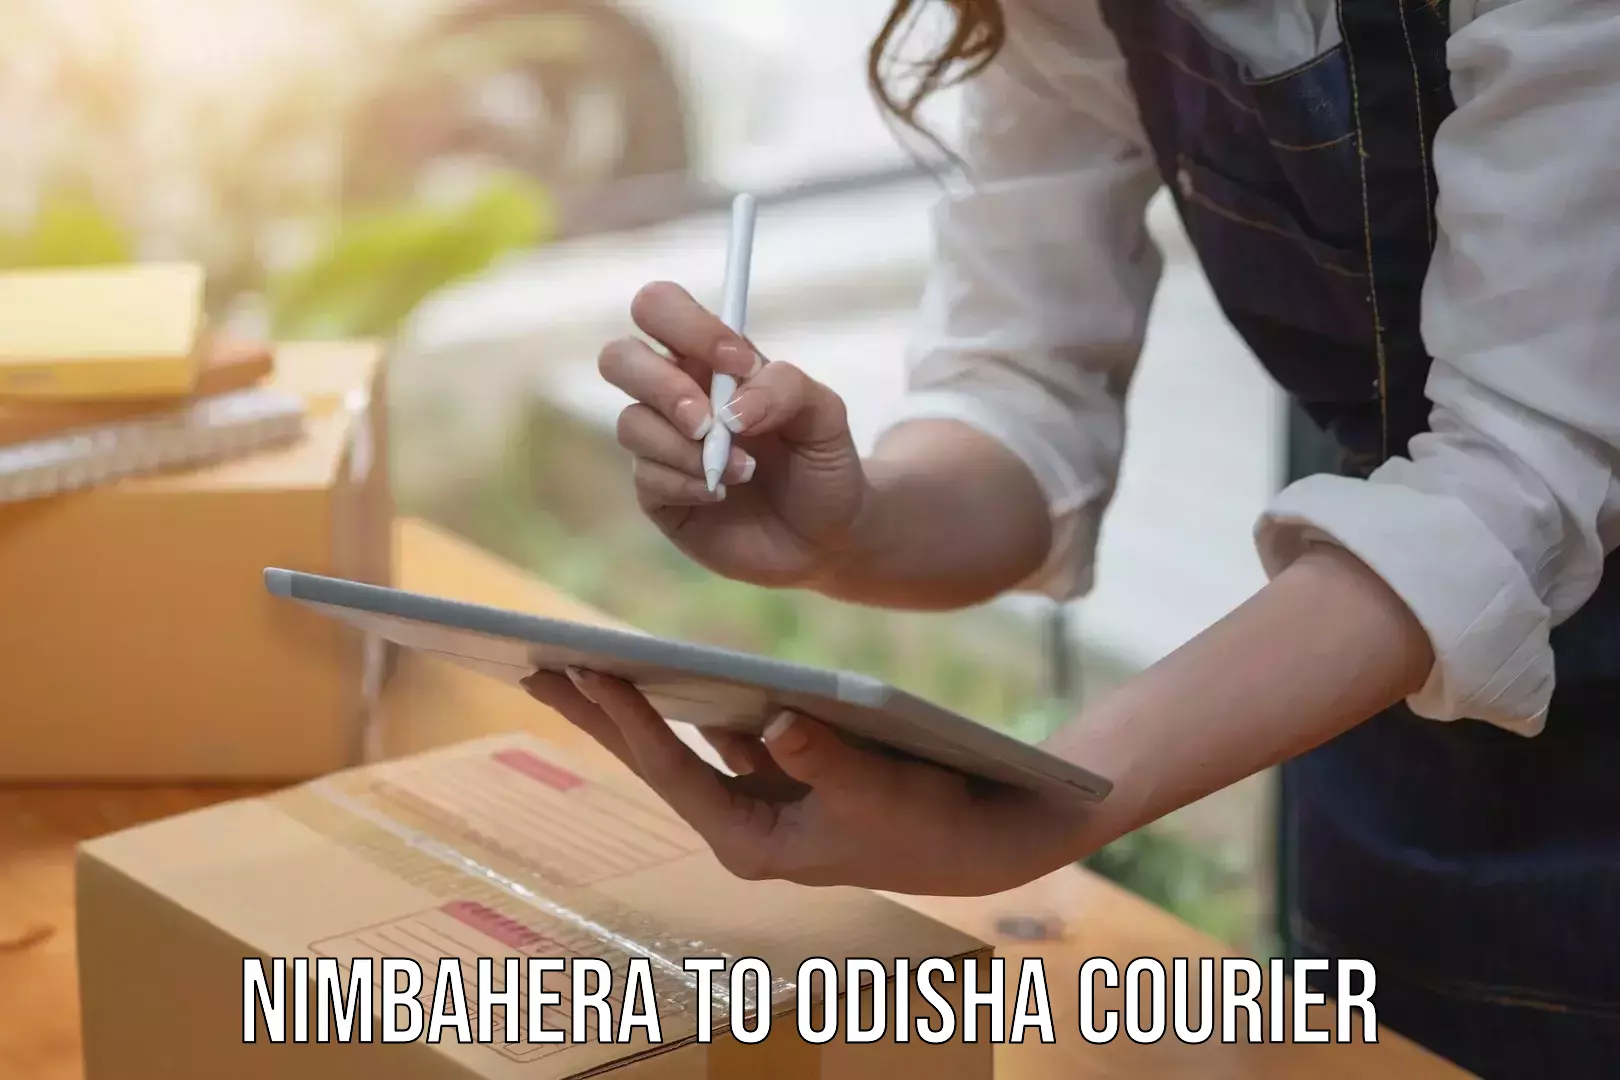 Courier service comparison Nimbahera to Gajapati